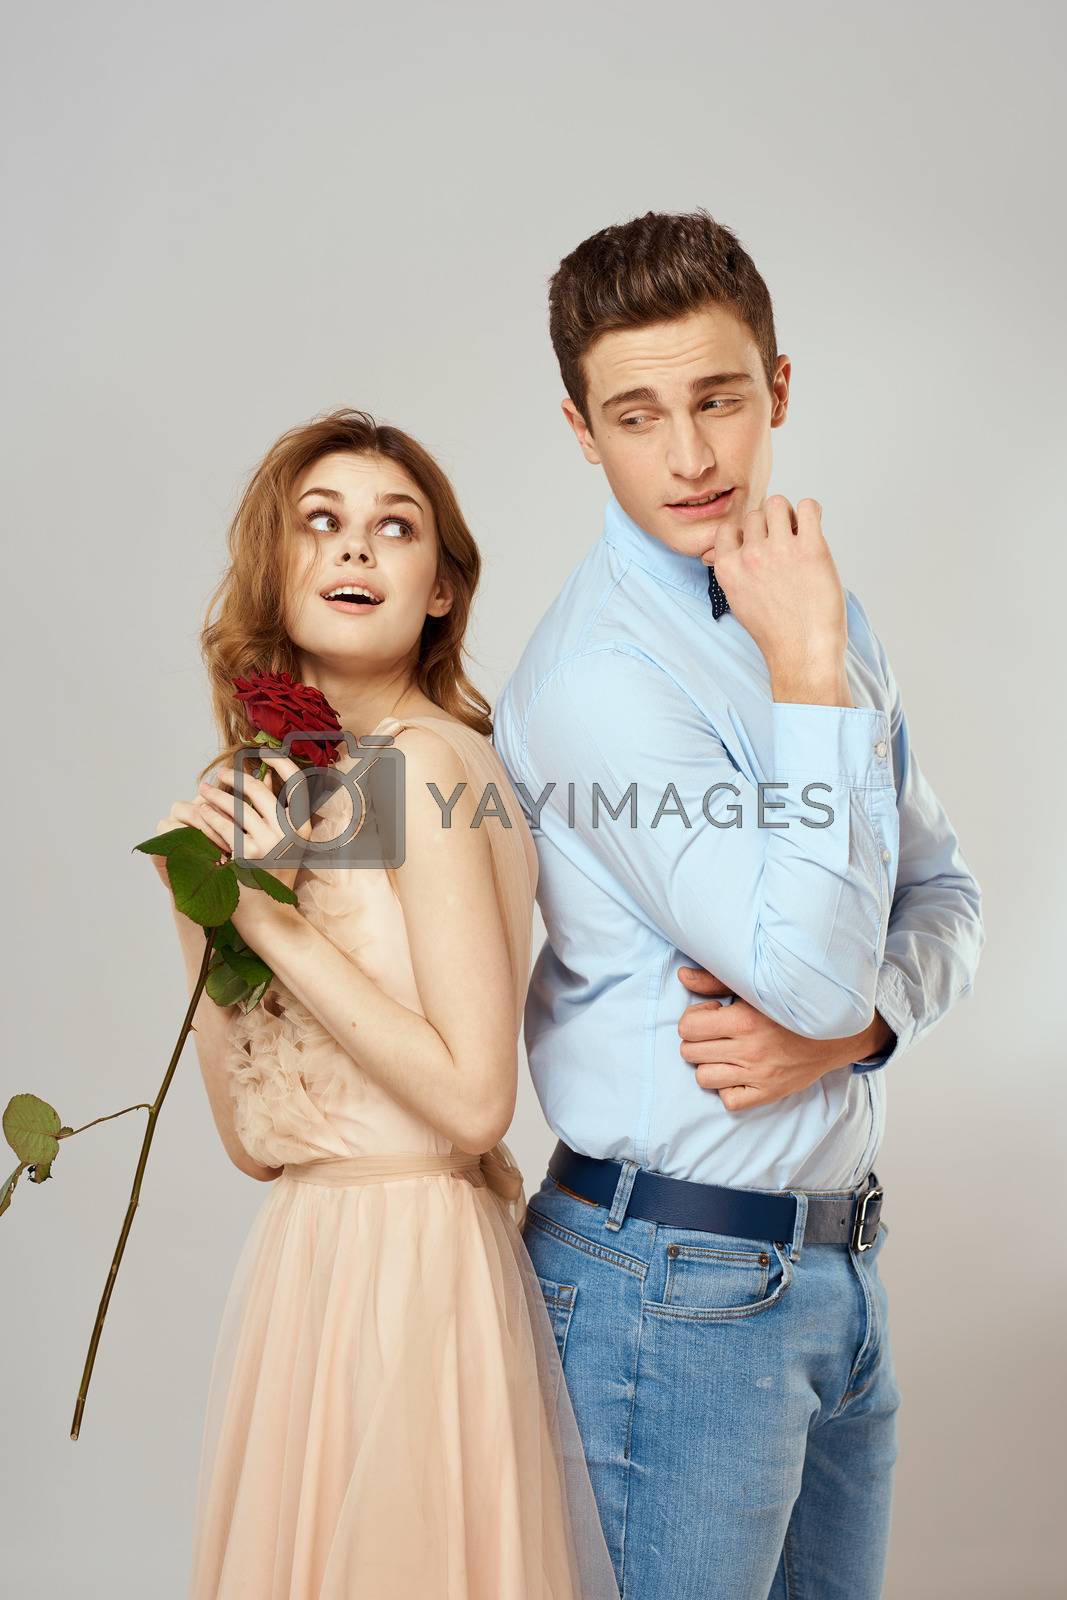 beautiful couple relationship rose gift as romance hug light background. High quality photo